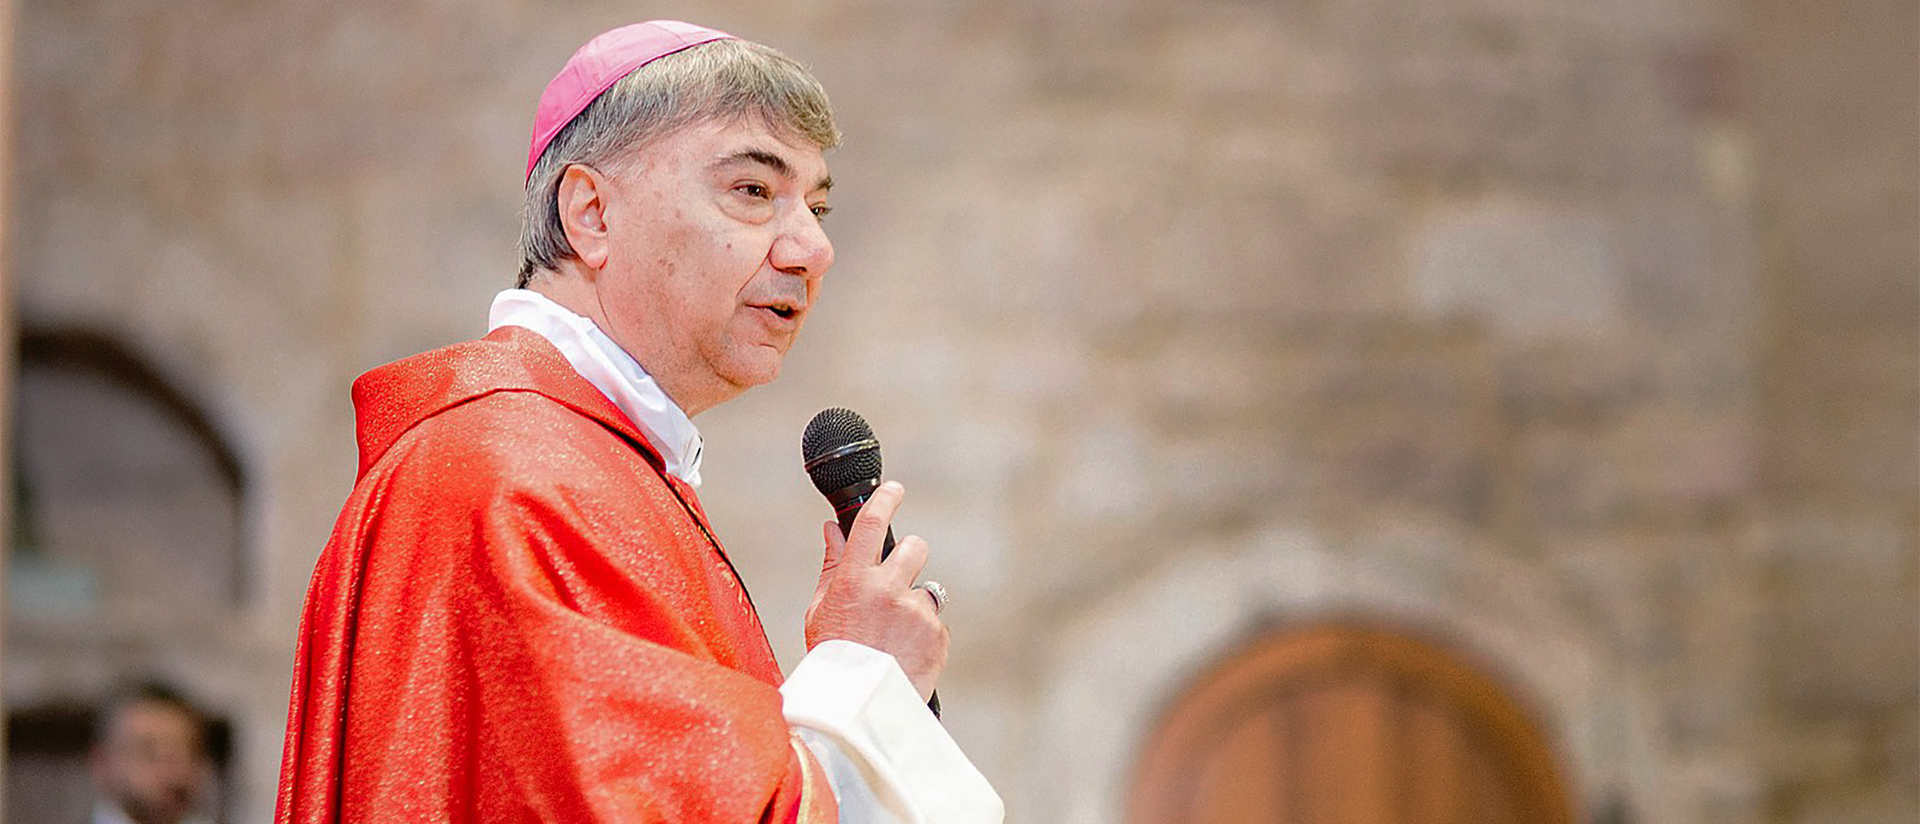 Don Mimmo Battaglia nommé archevêque de Naples | Wikimedia Common – Vincenzo Amoruso – CC BY-SA 4.0